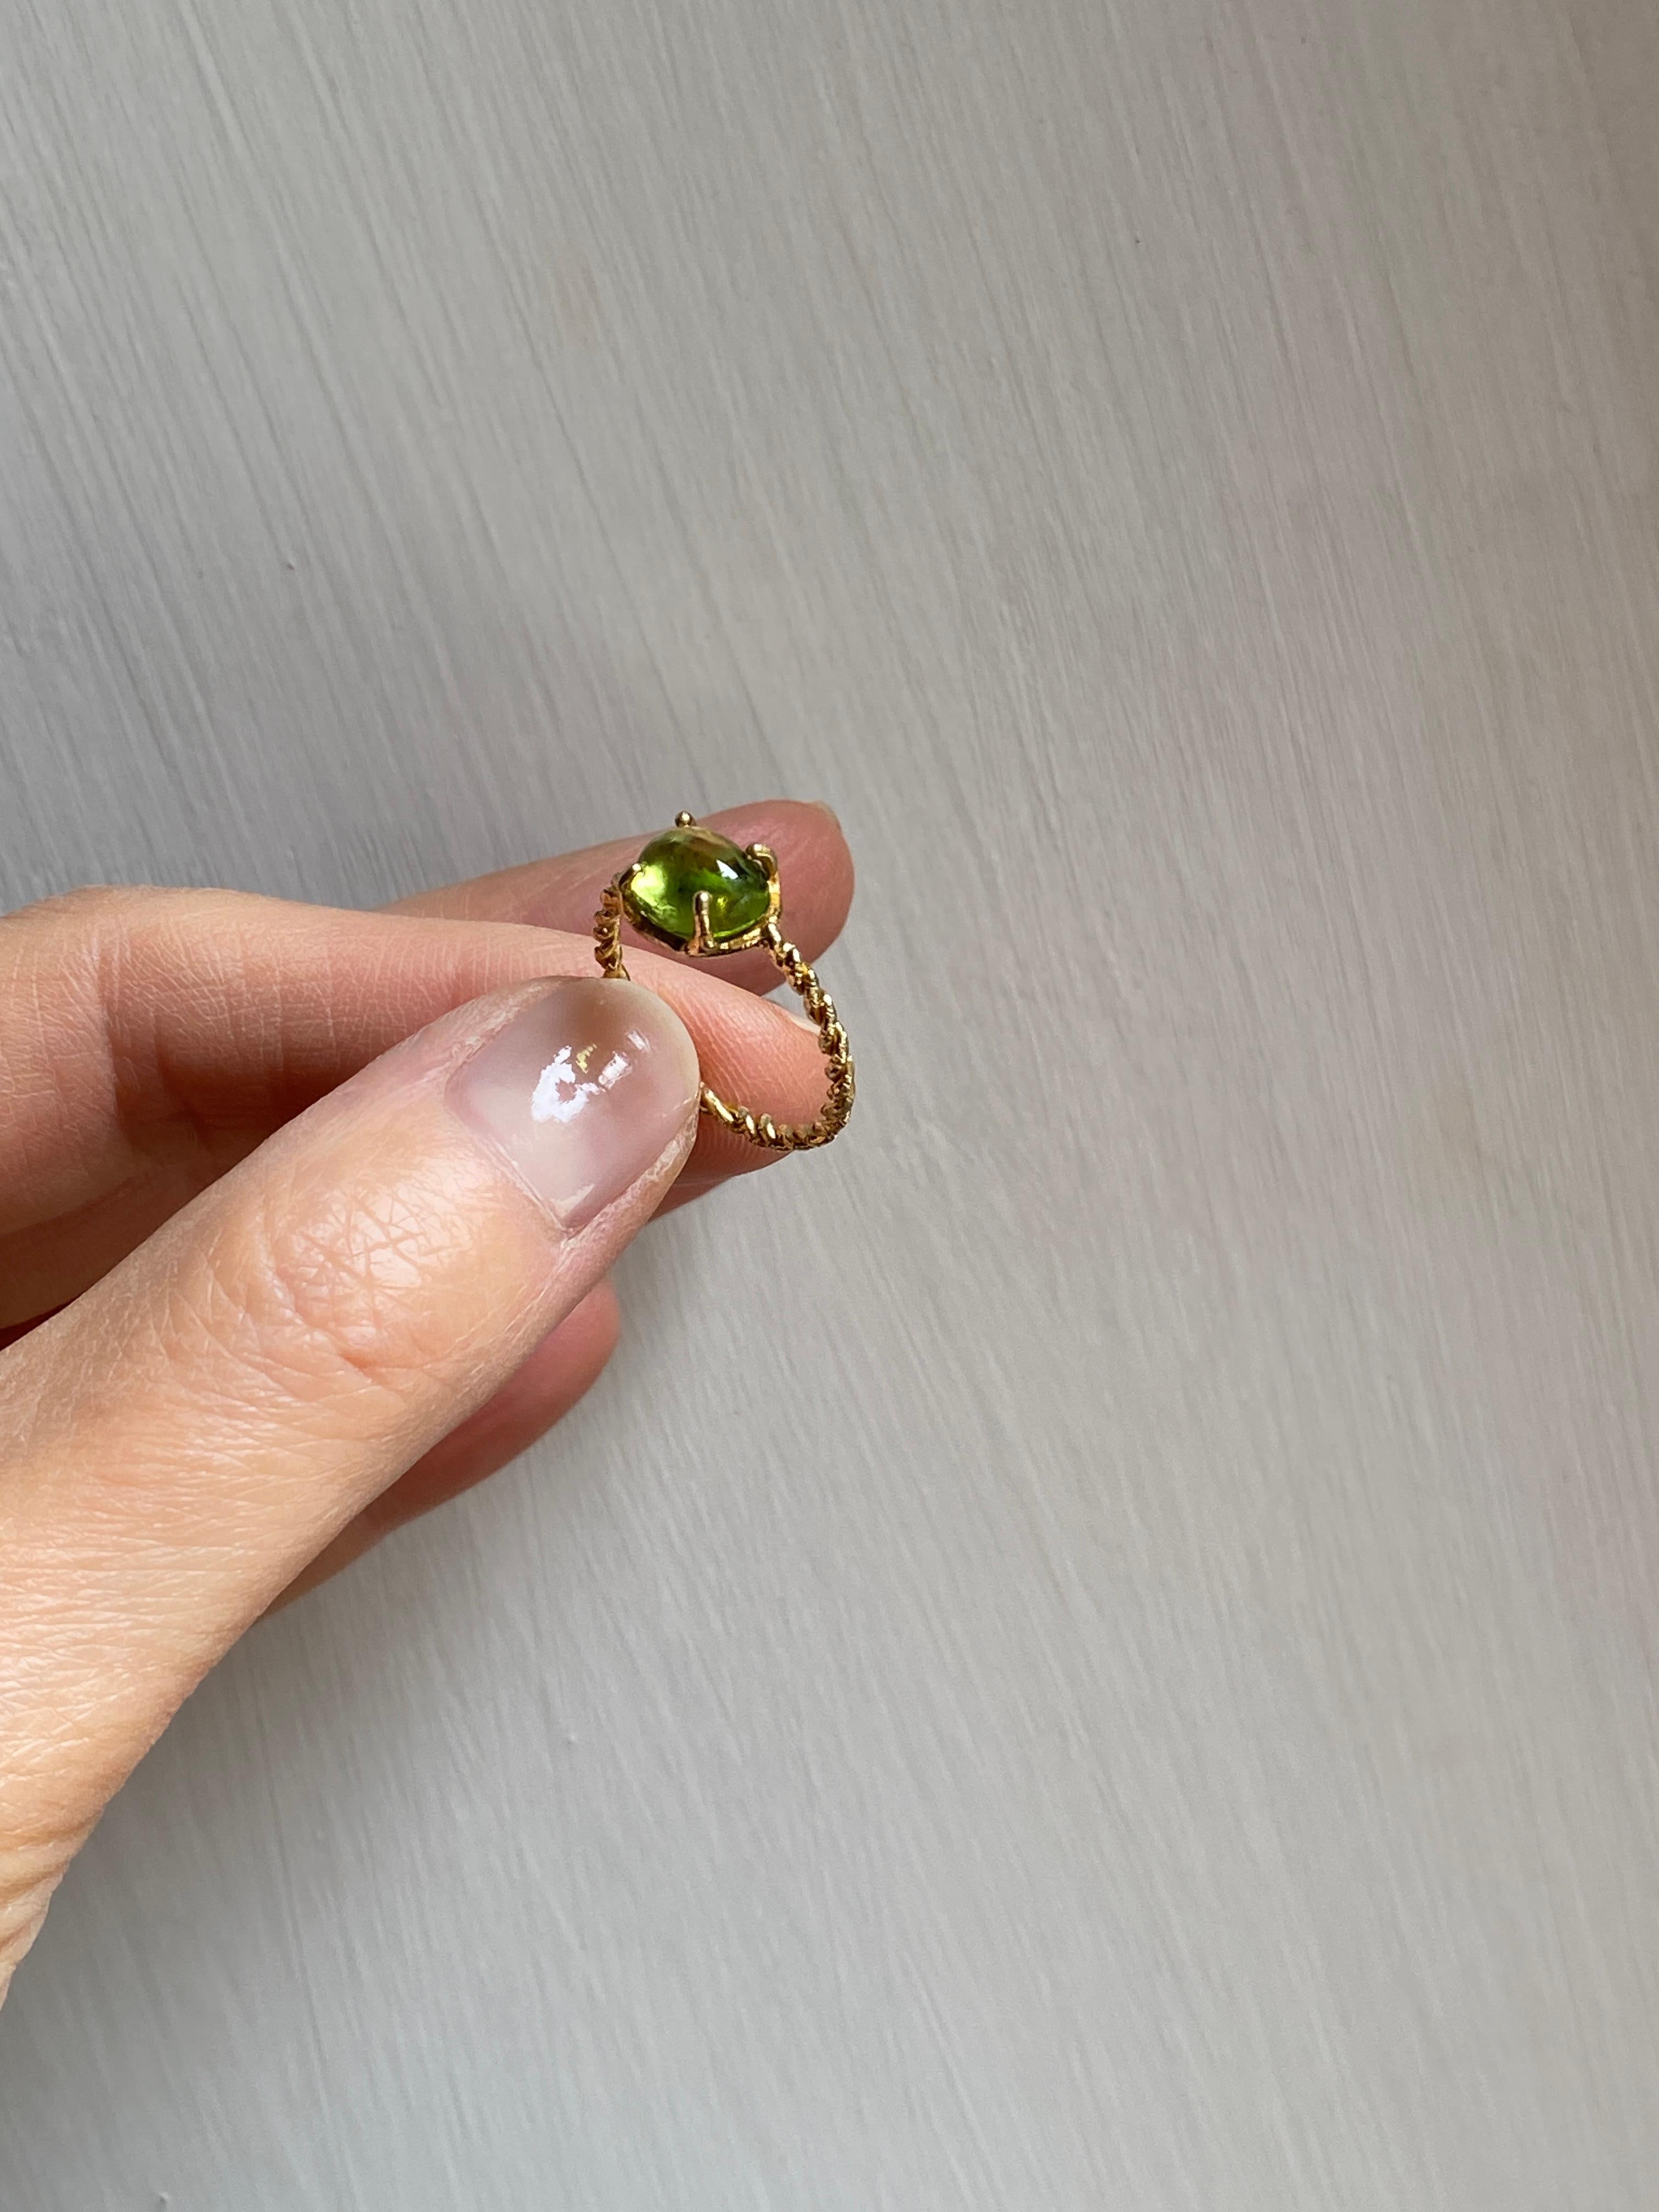 Rossella Ugolini 18K Yellow Gold Delicate Unique Peridot Ring Nature Inspired For Sale 4